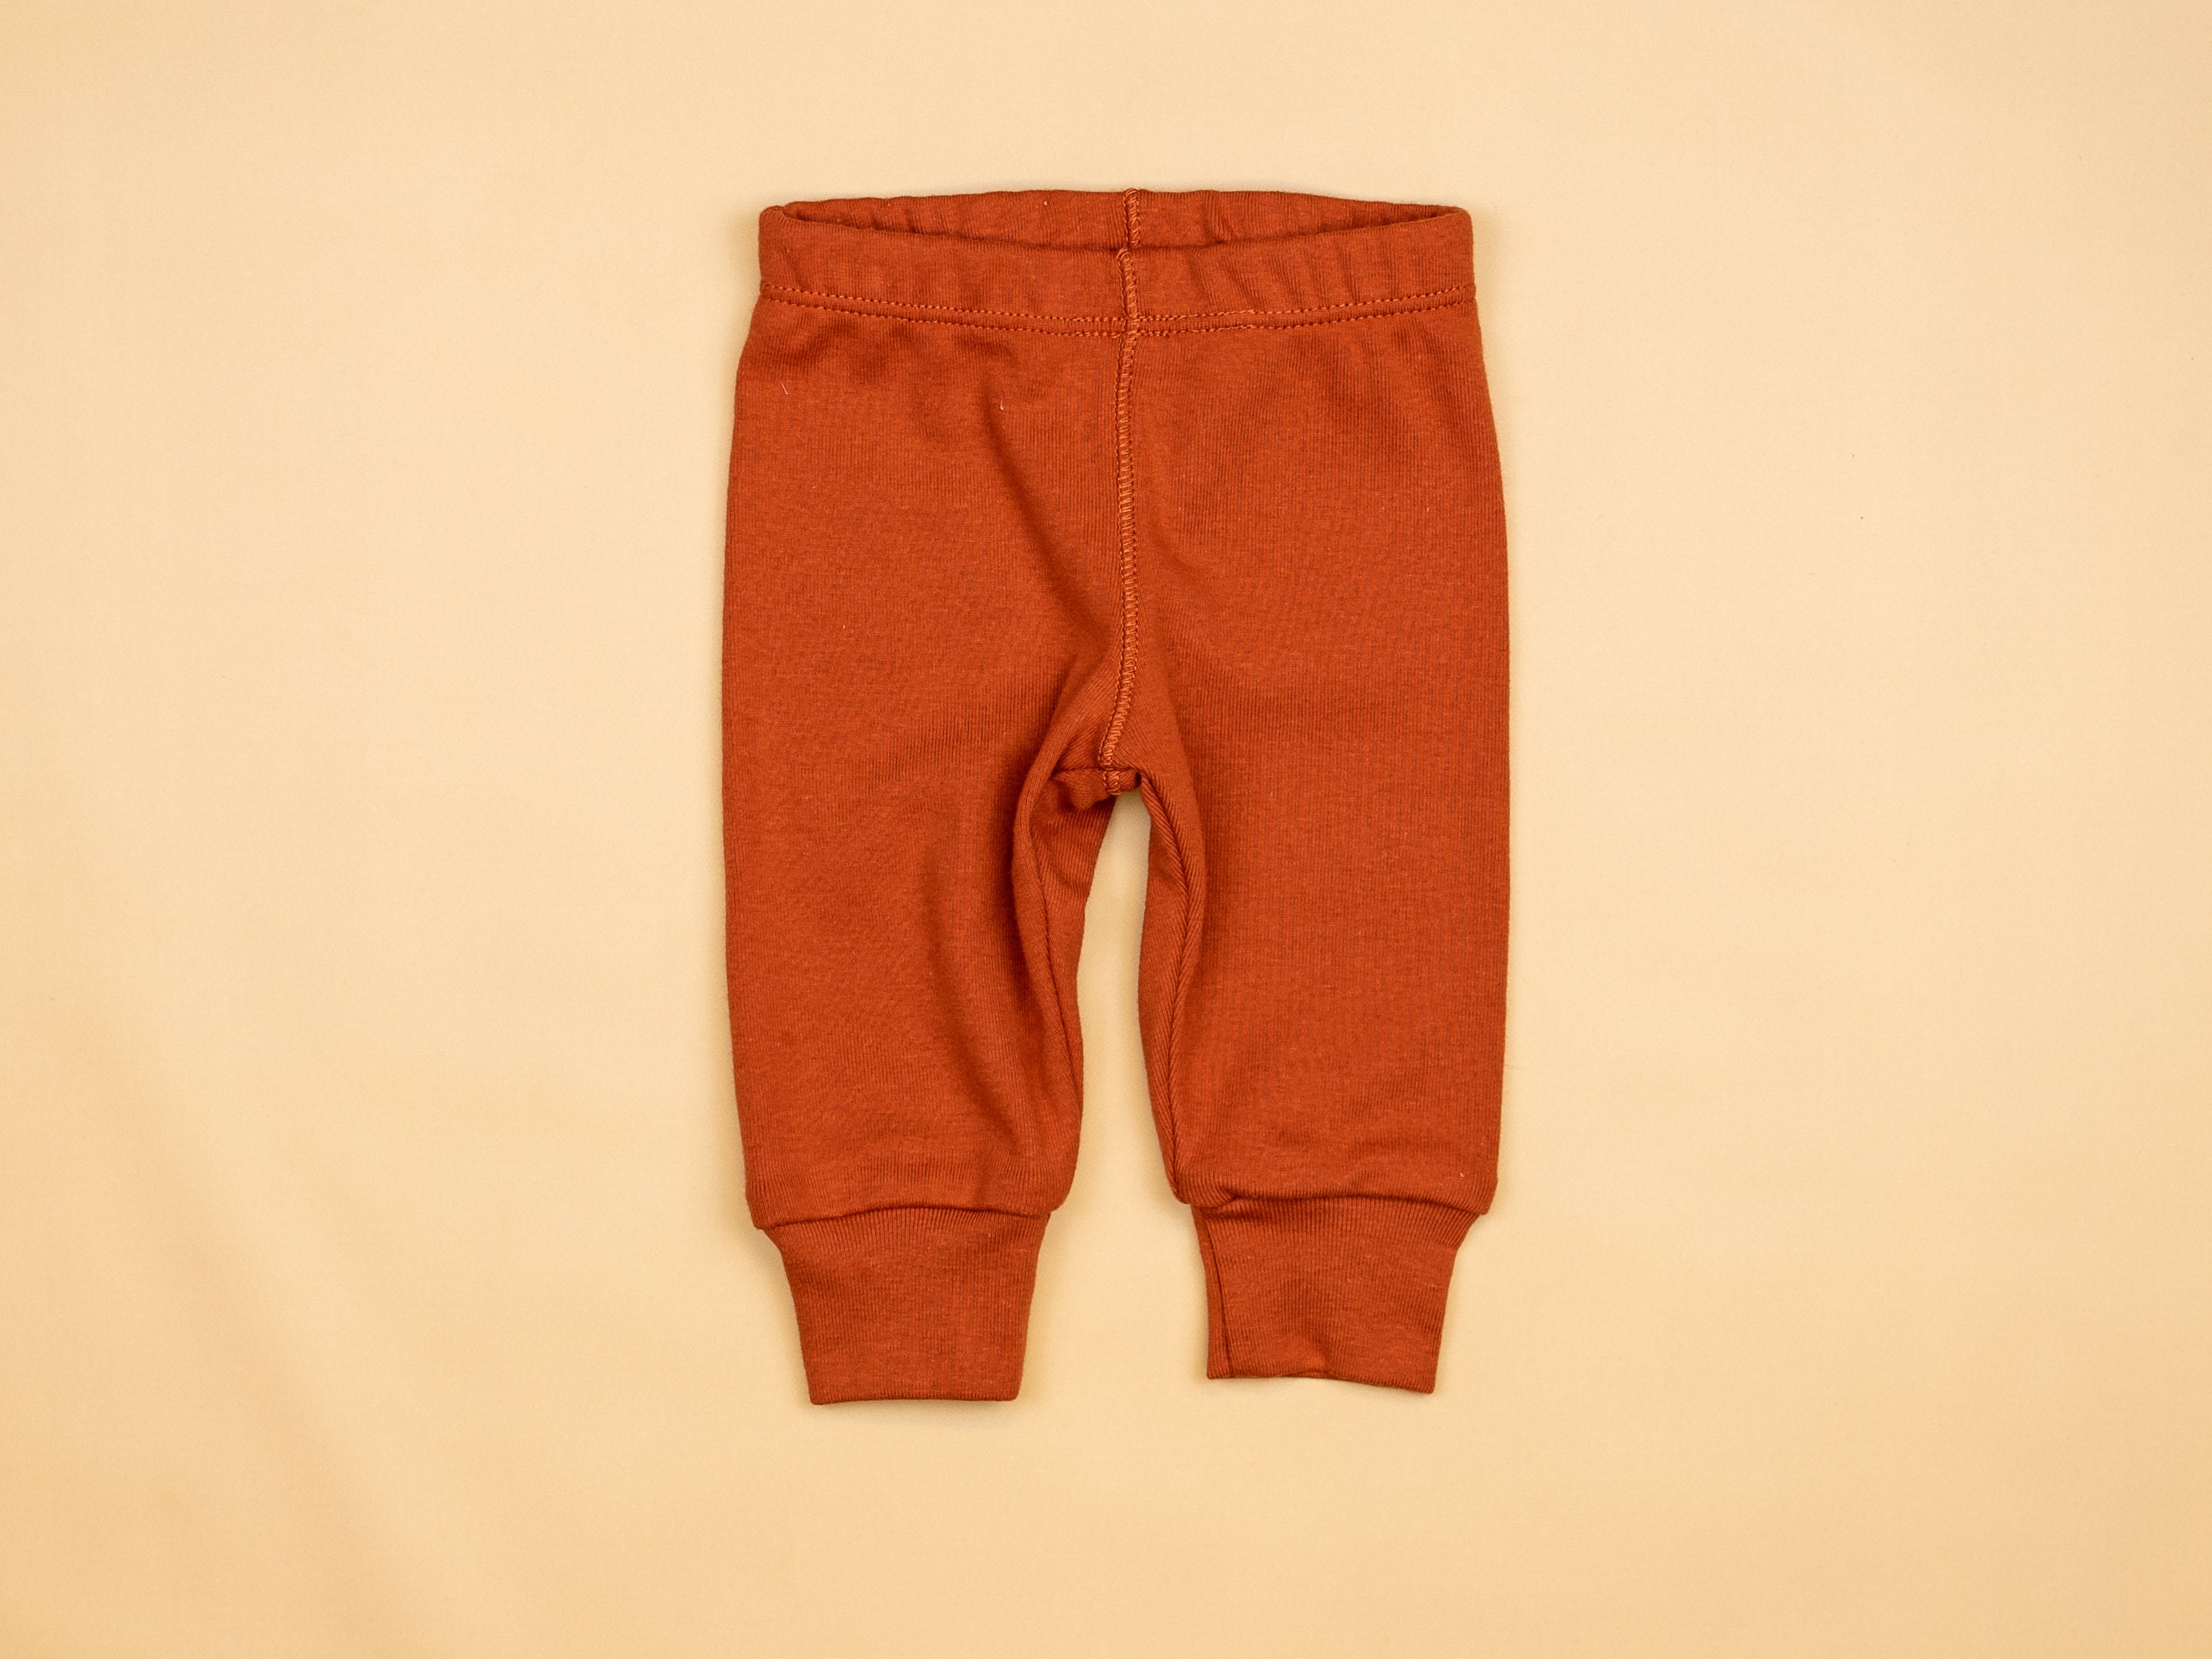 Buy Burnt Orange Pants Online In India  Etsy India